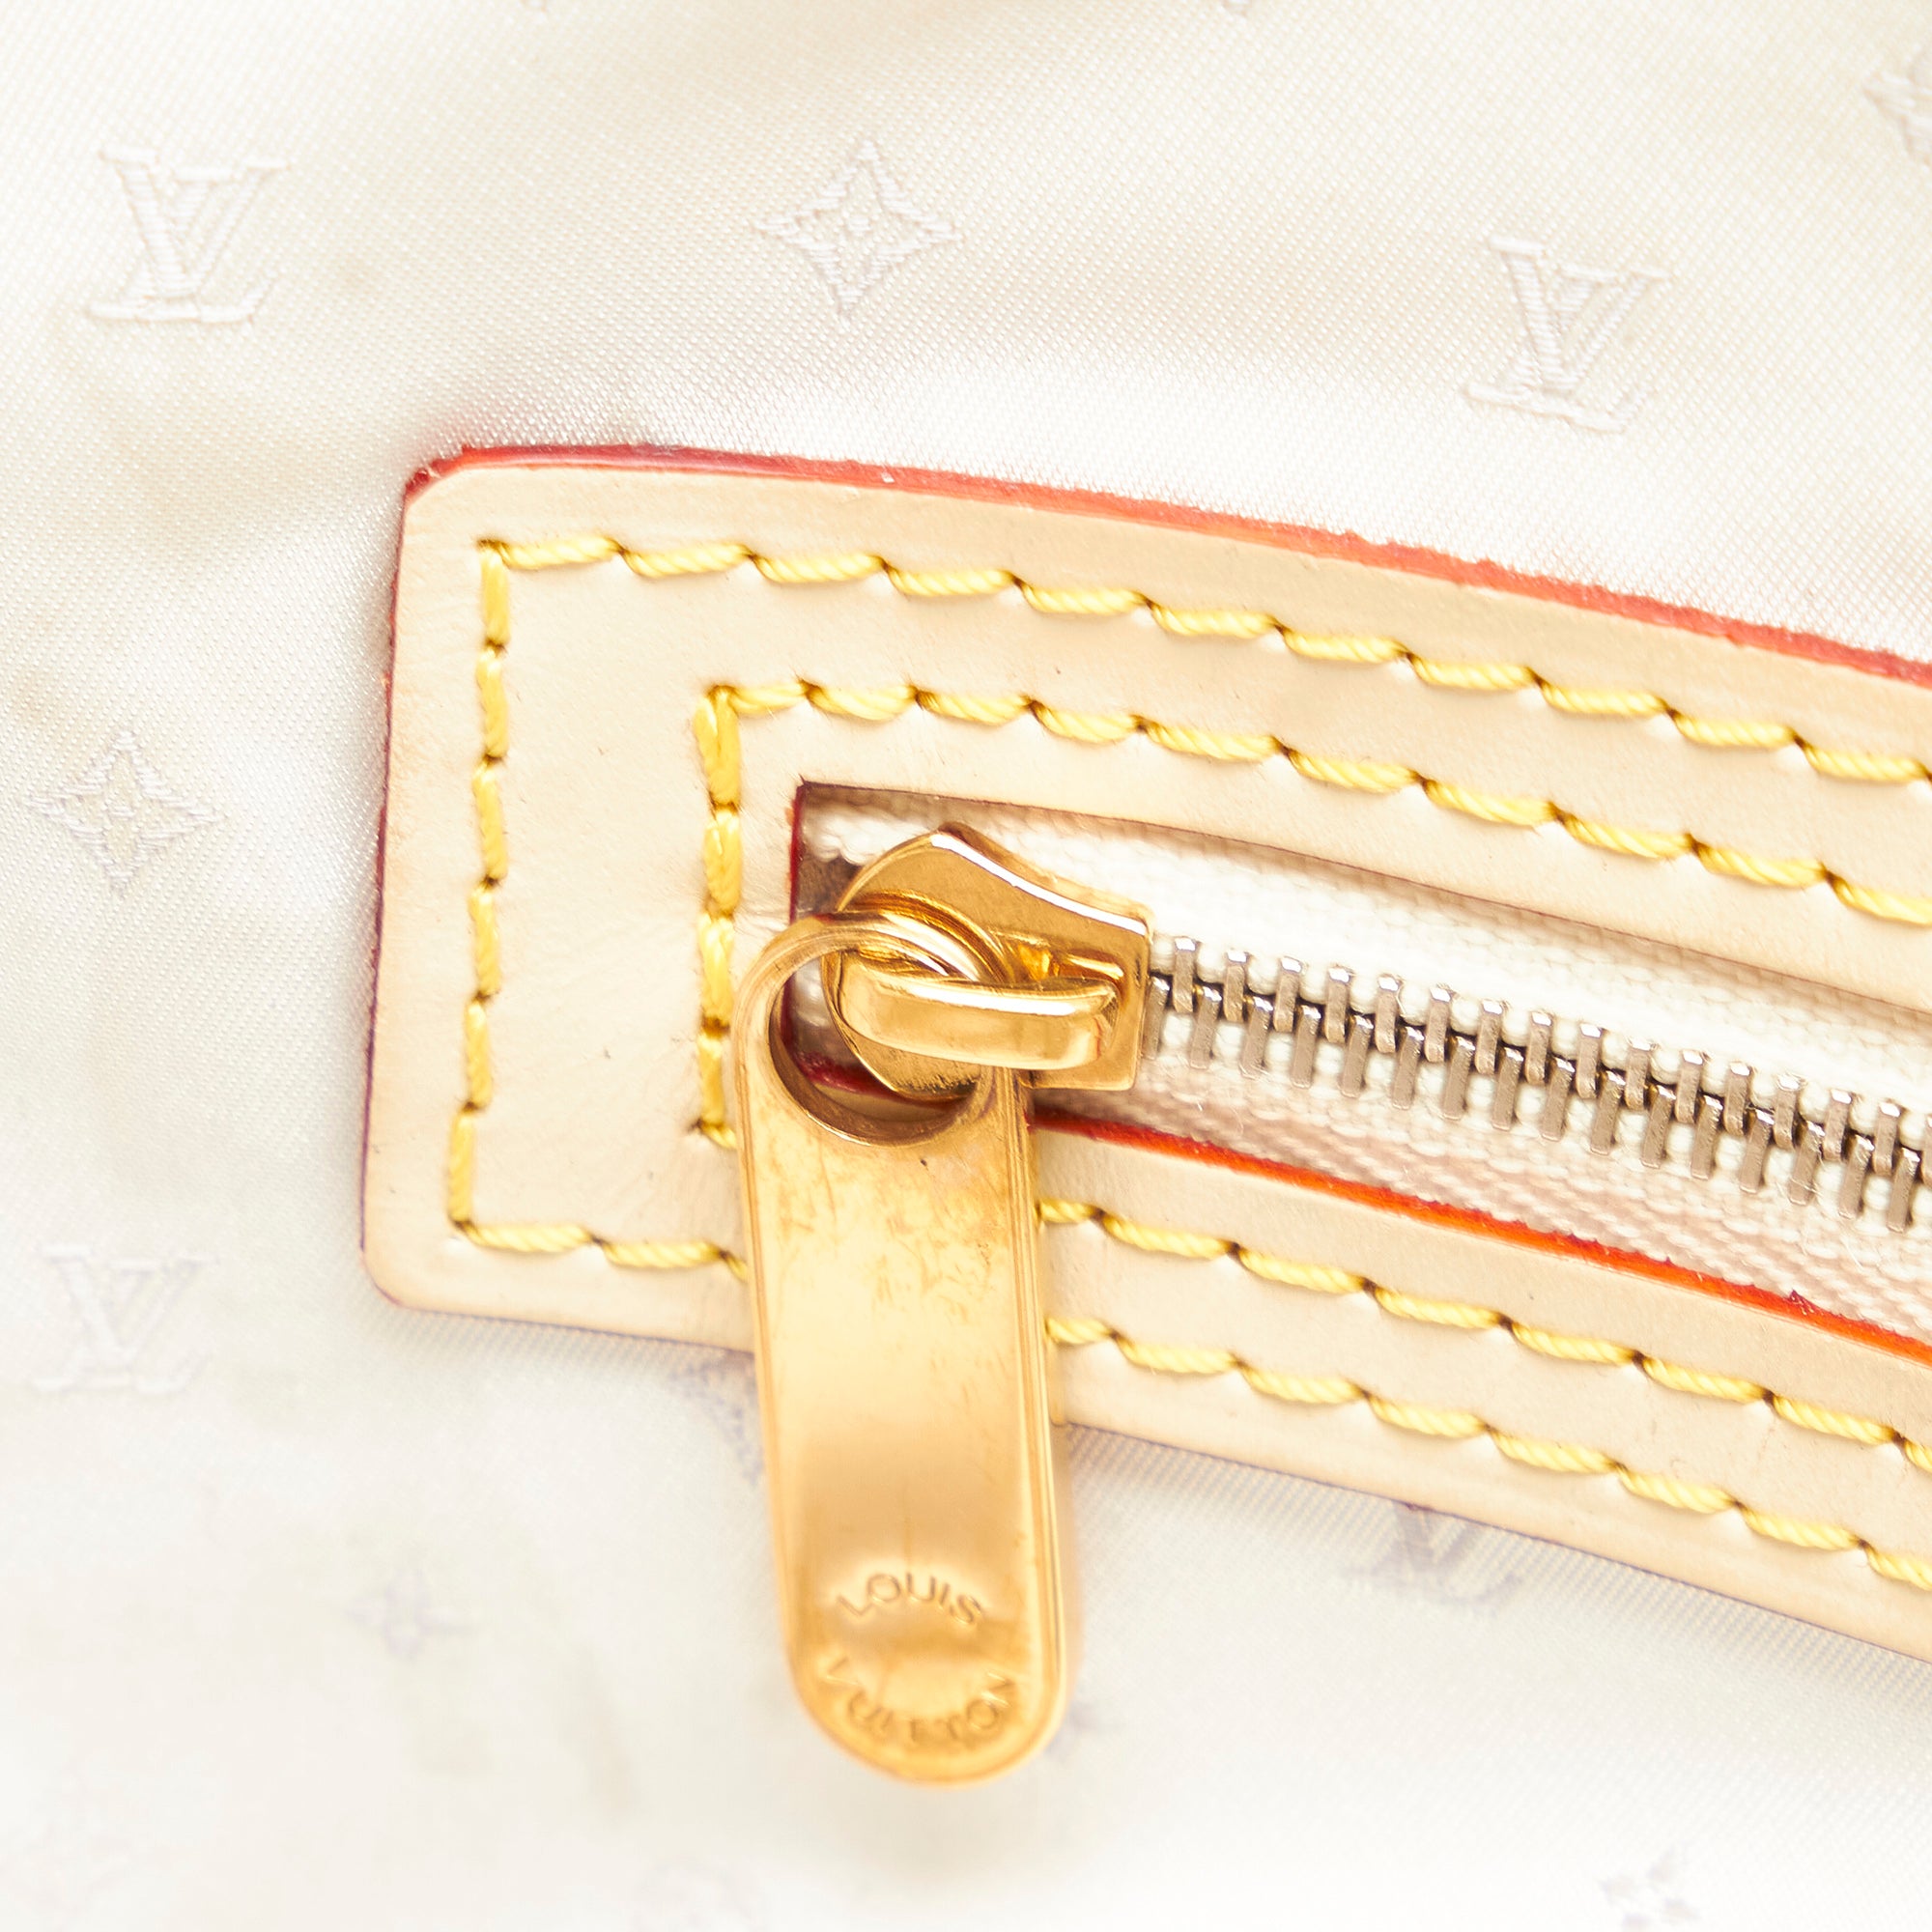 Beige Louis Vuitton Suhali Lockit MM Handbag – Designer Revival